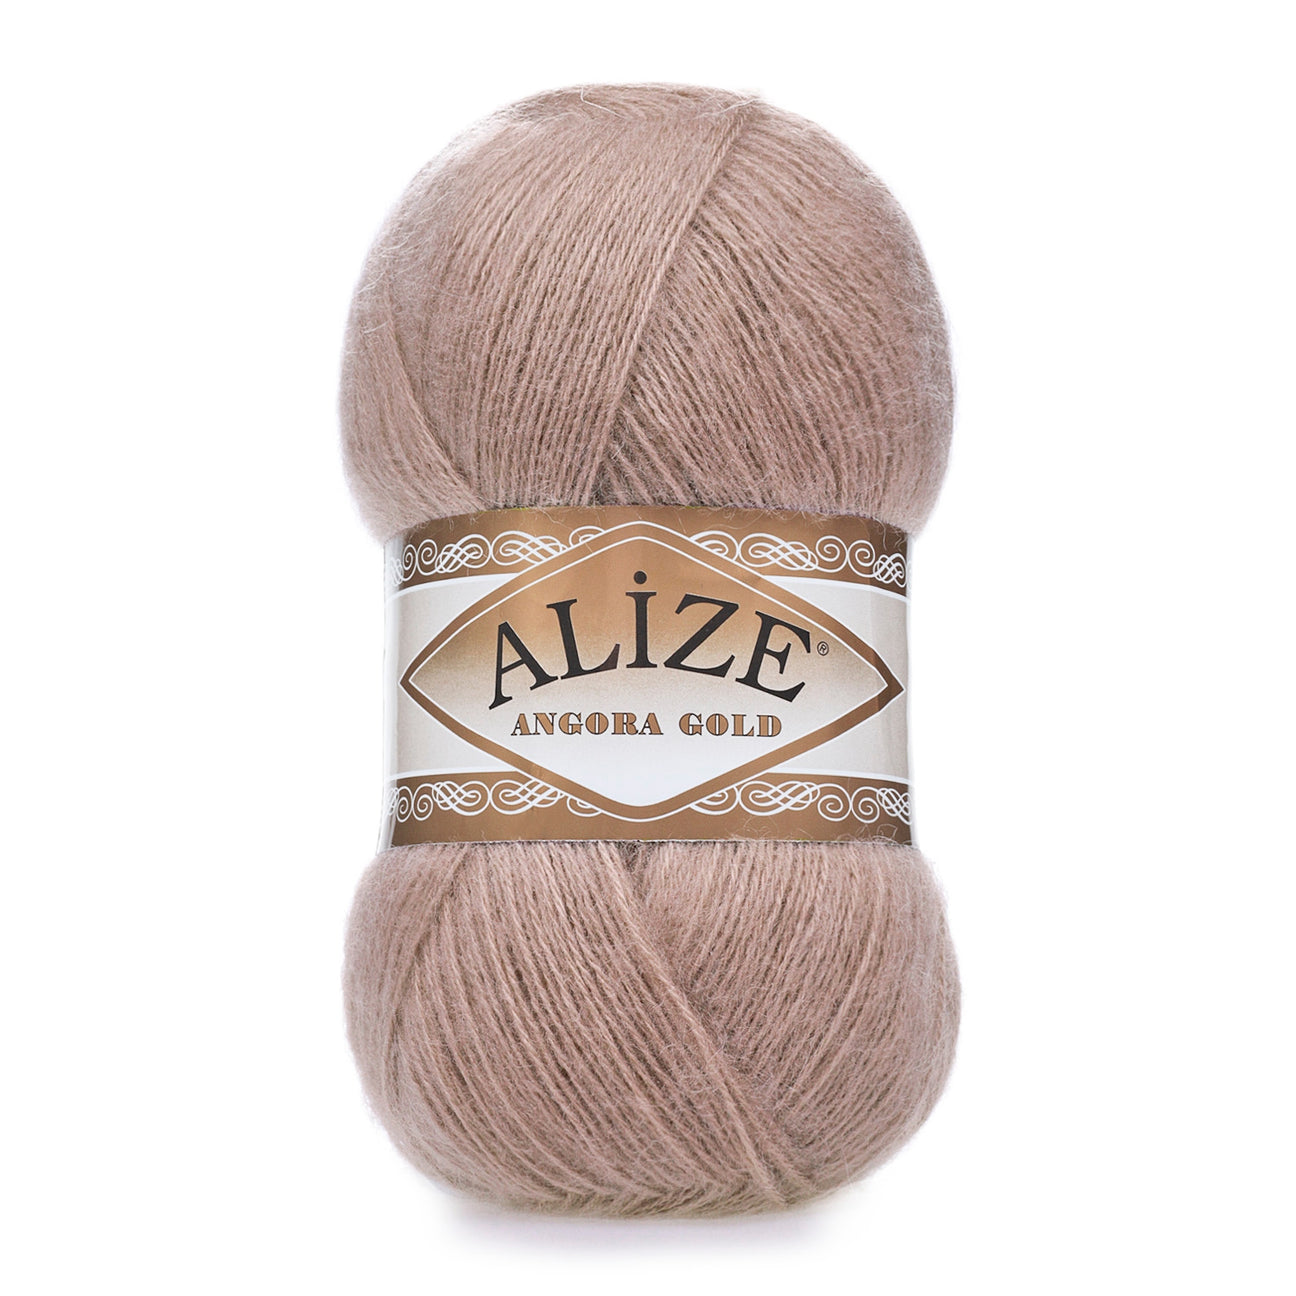 Alize Cotton Gold Hobby New Baby Yarn for Hand Knitting Crochet Amigurumi  DIY Knitwear Scarf Shawl Sweater Cardigan Vest